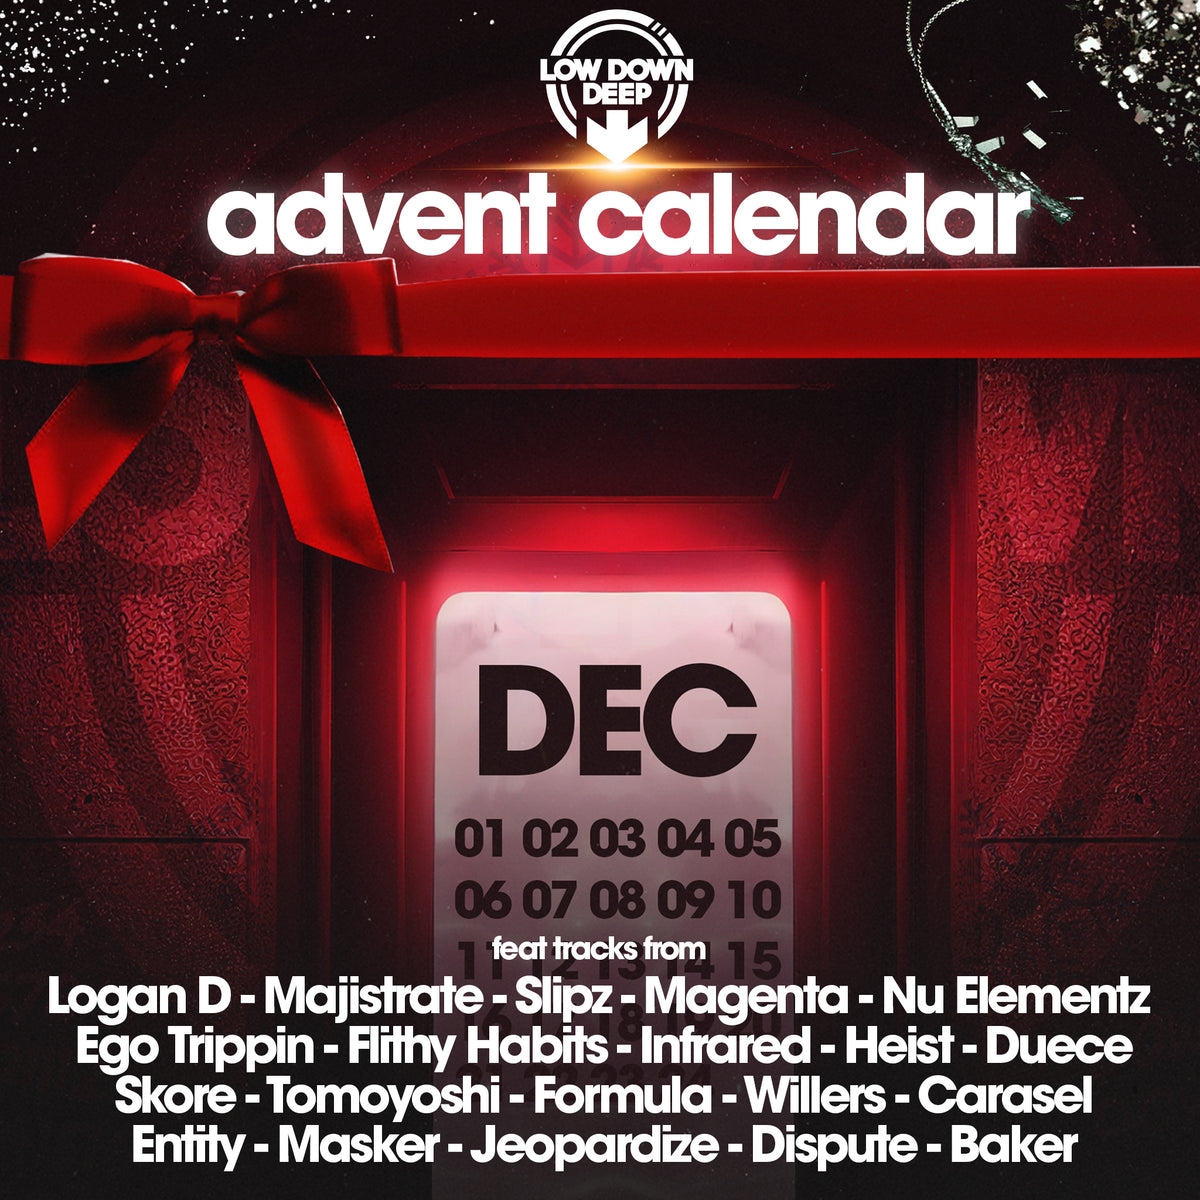 LDDRADV025 - Various 'Low Down Deep Advent Calendar LP'